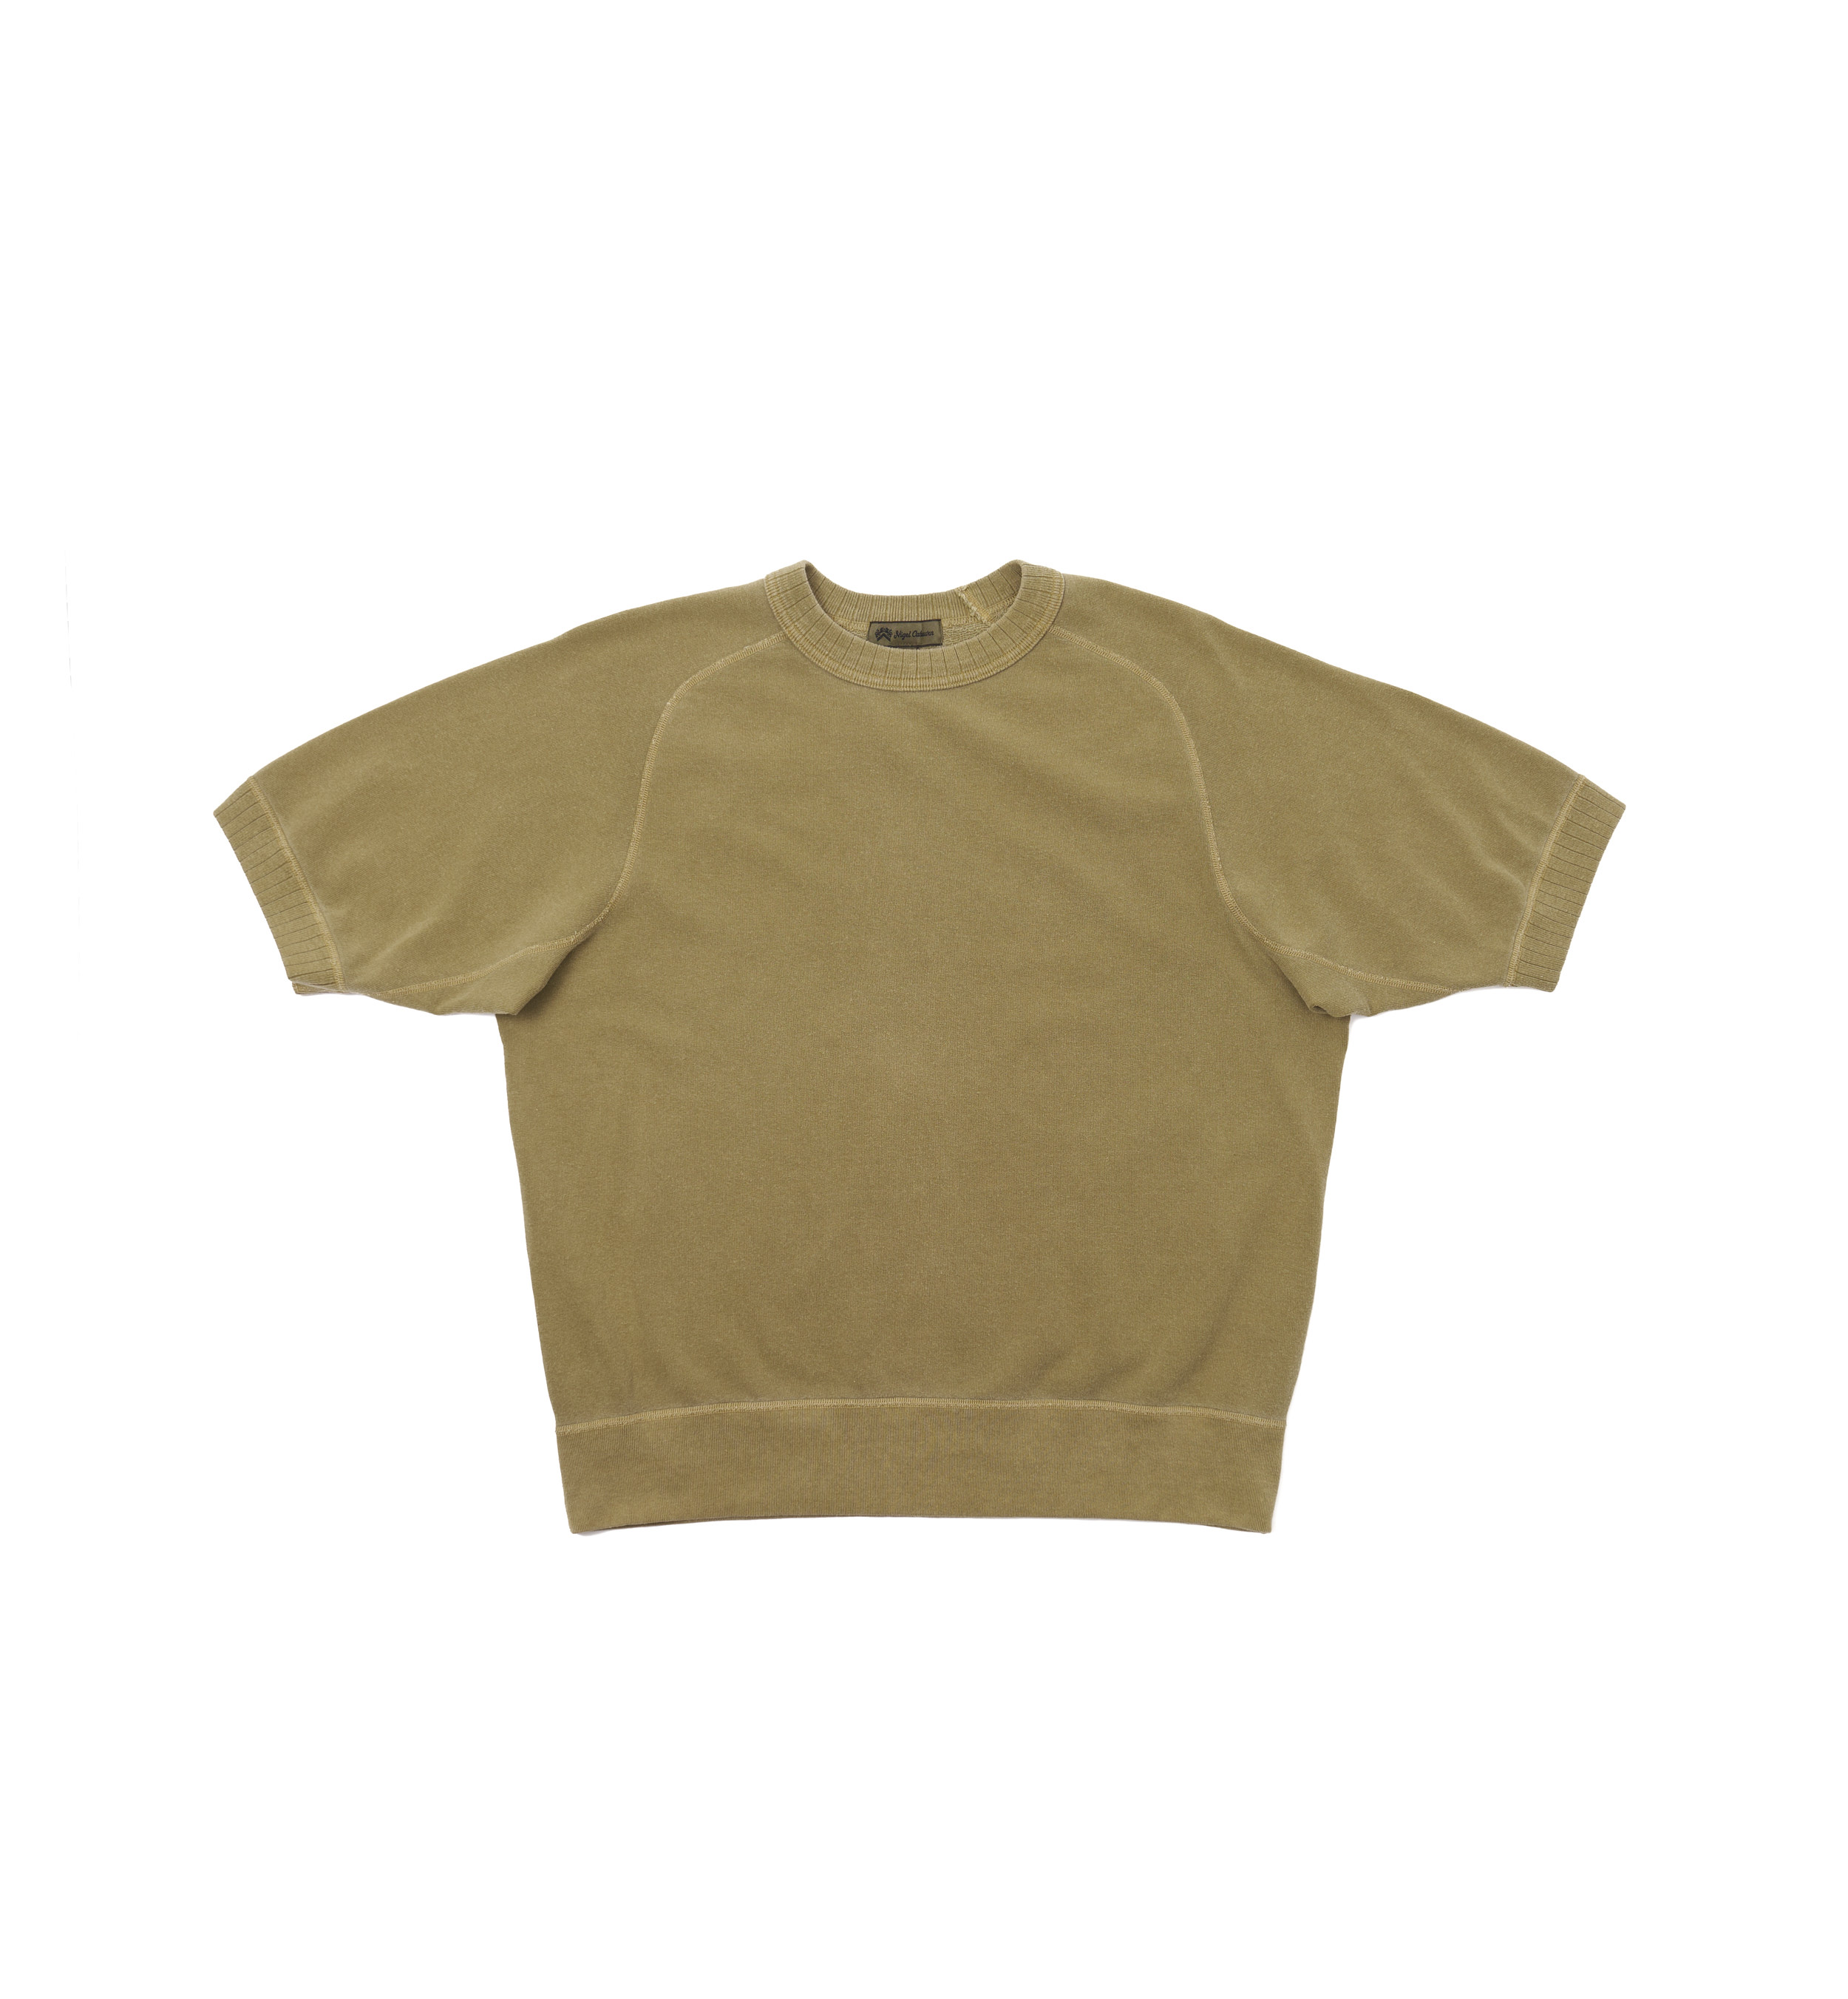 Tetoron Cotton Sweat Shirt Urage Pigment Green